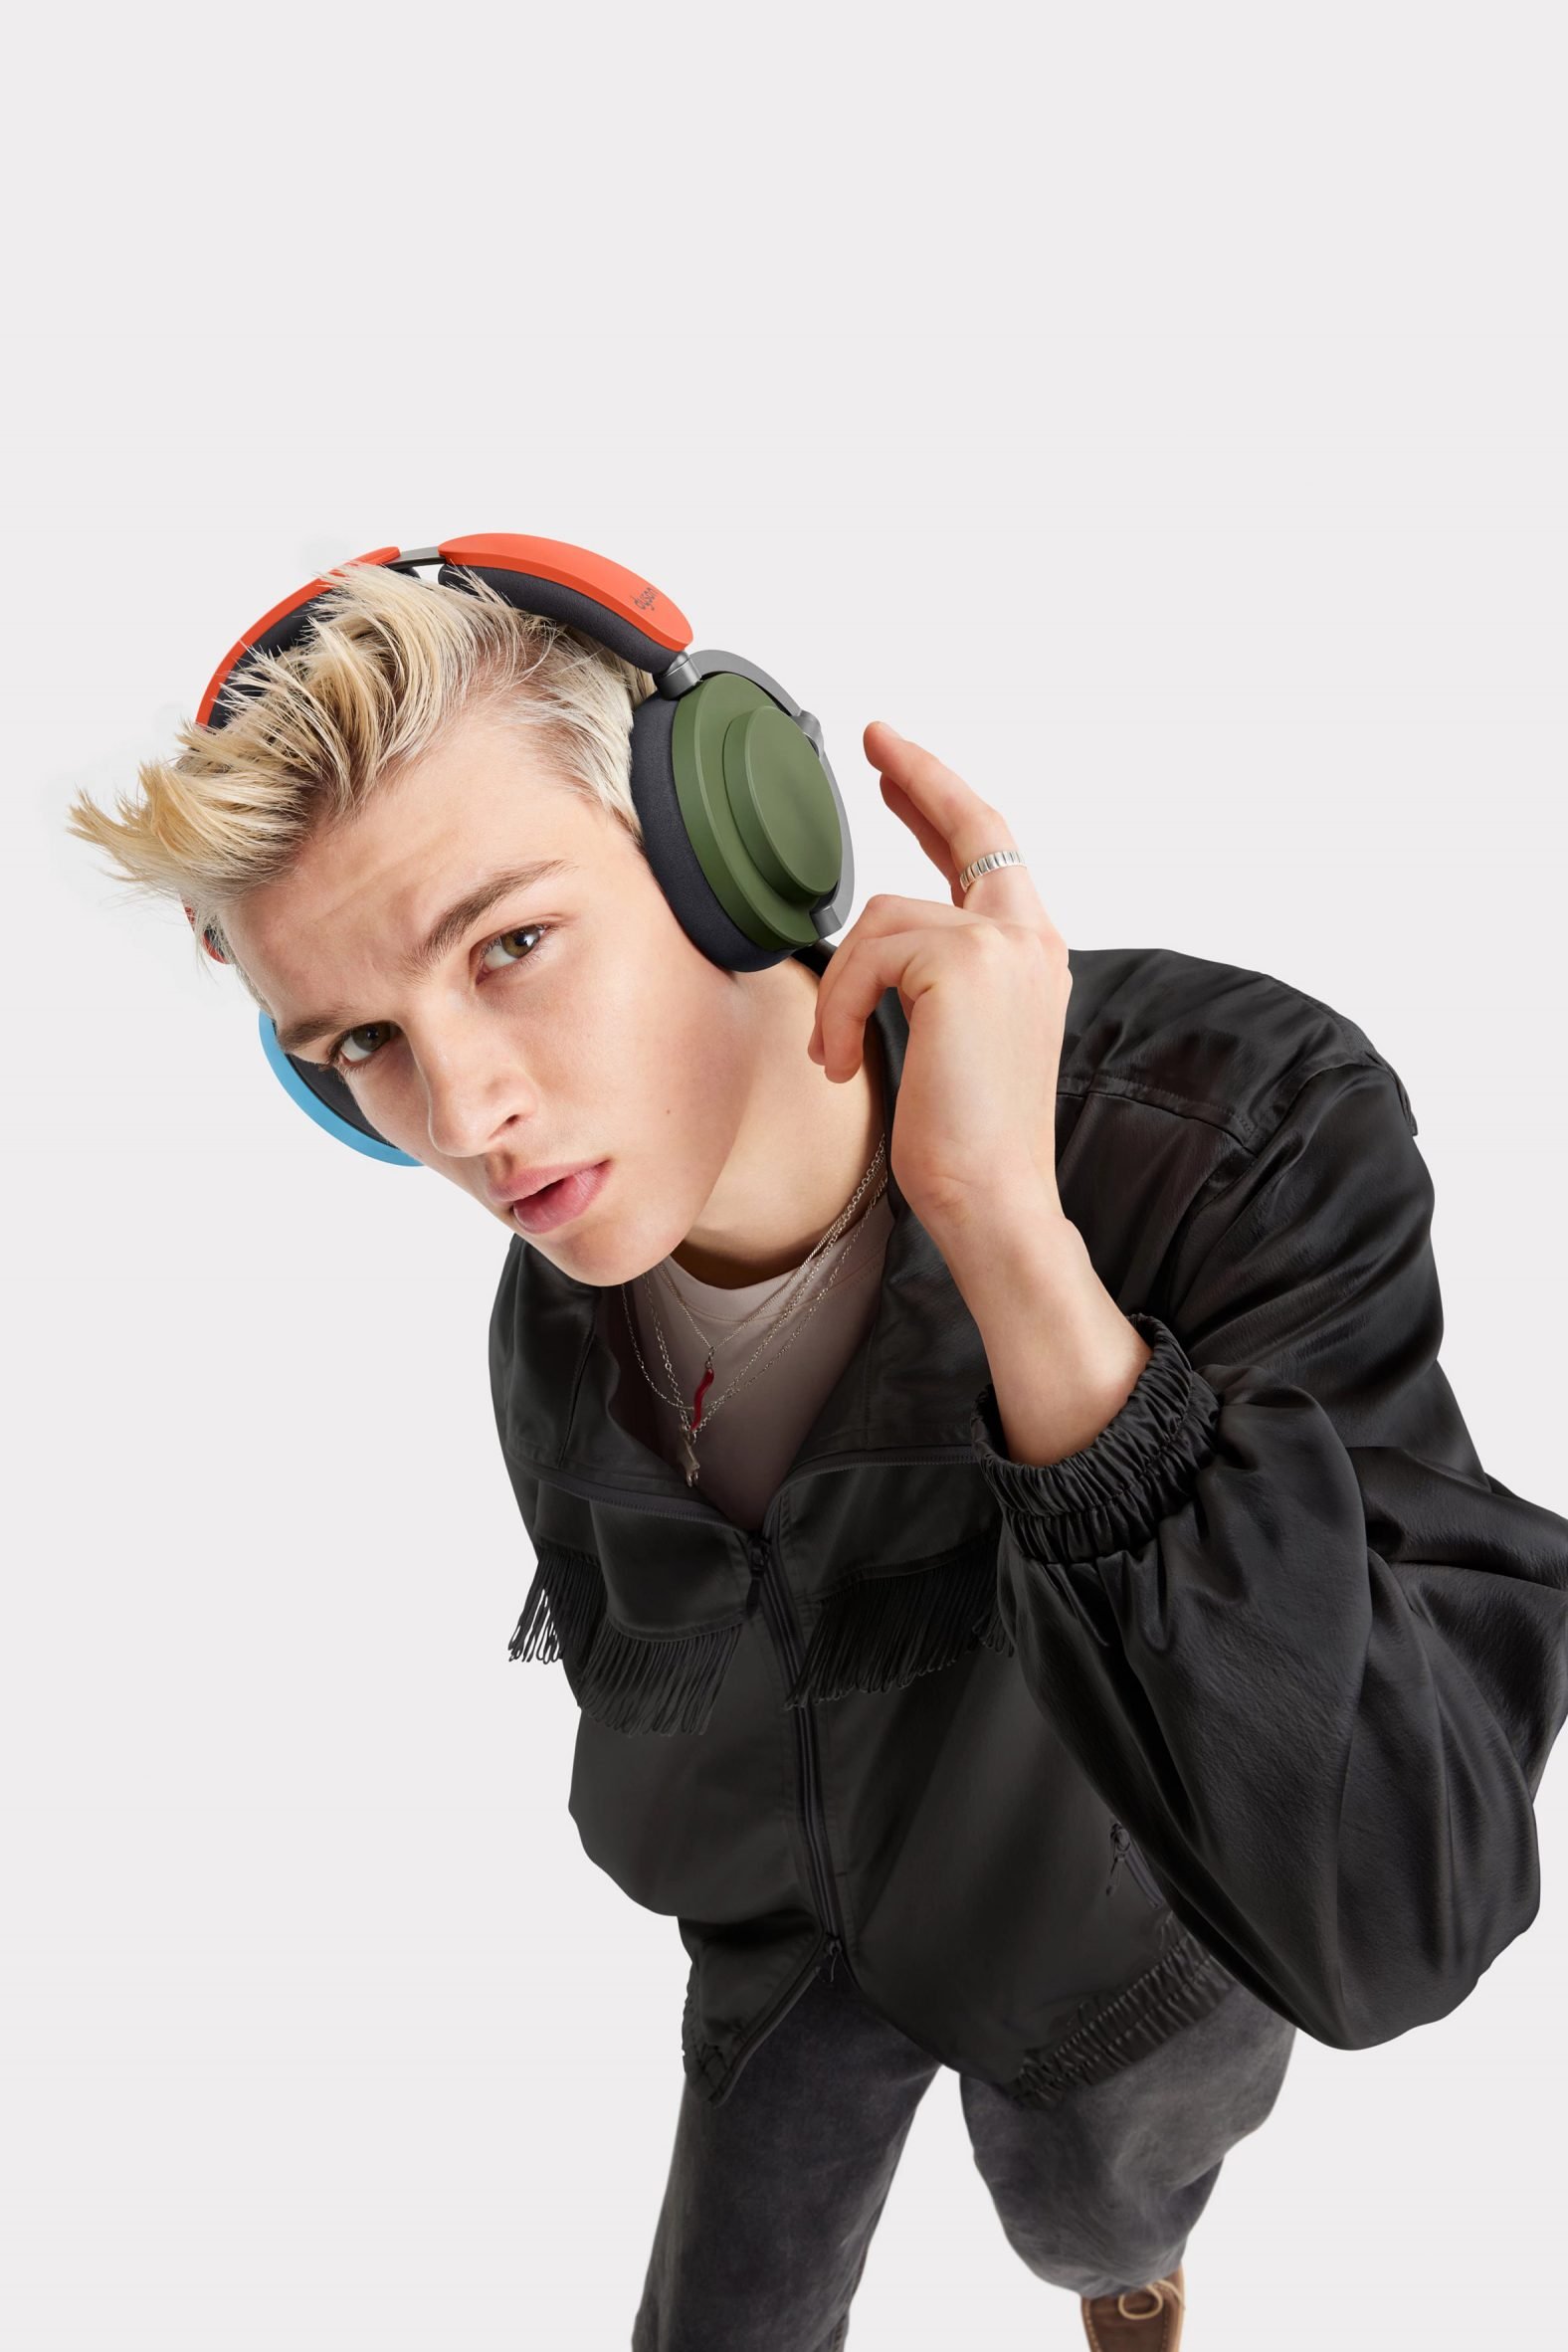 Dyson headphones